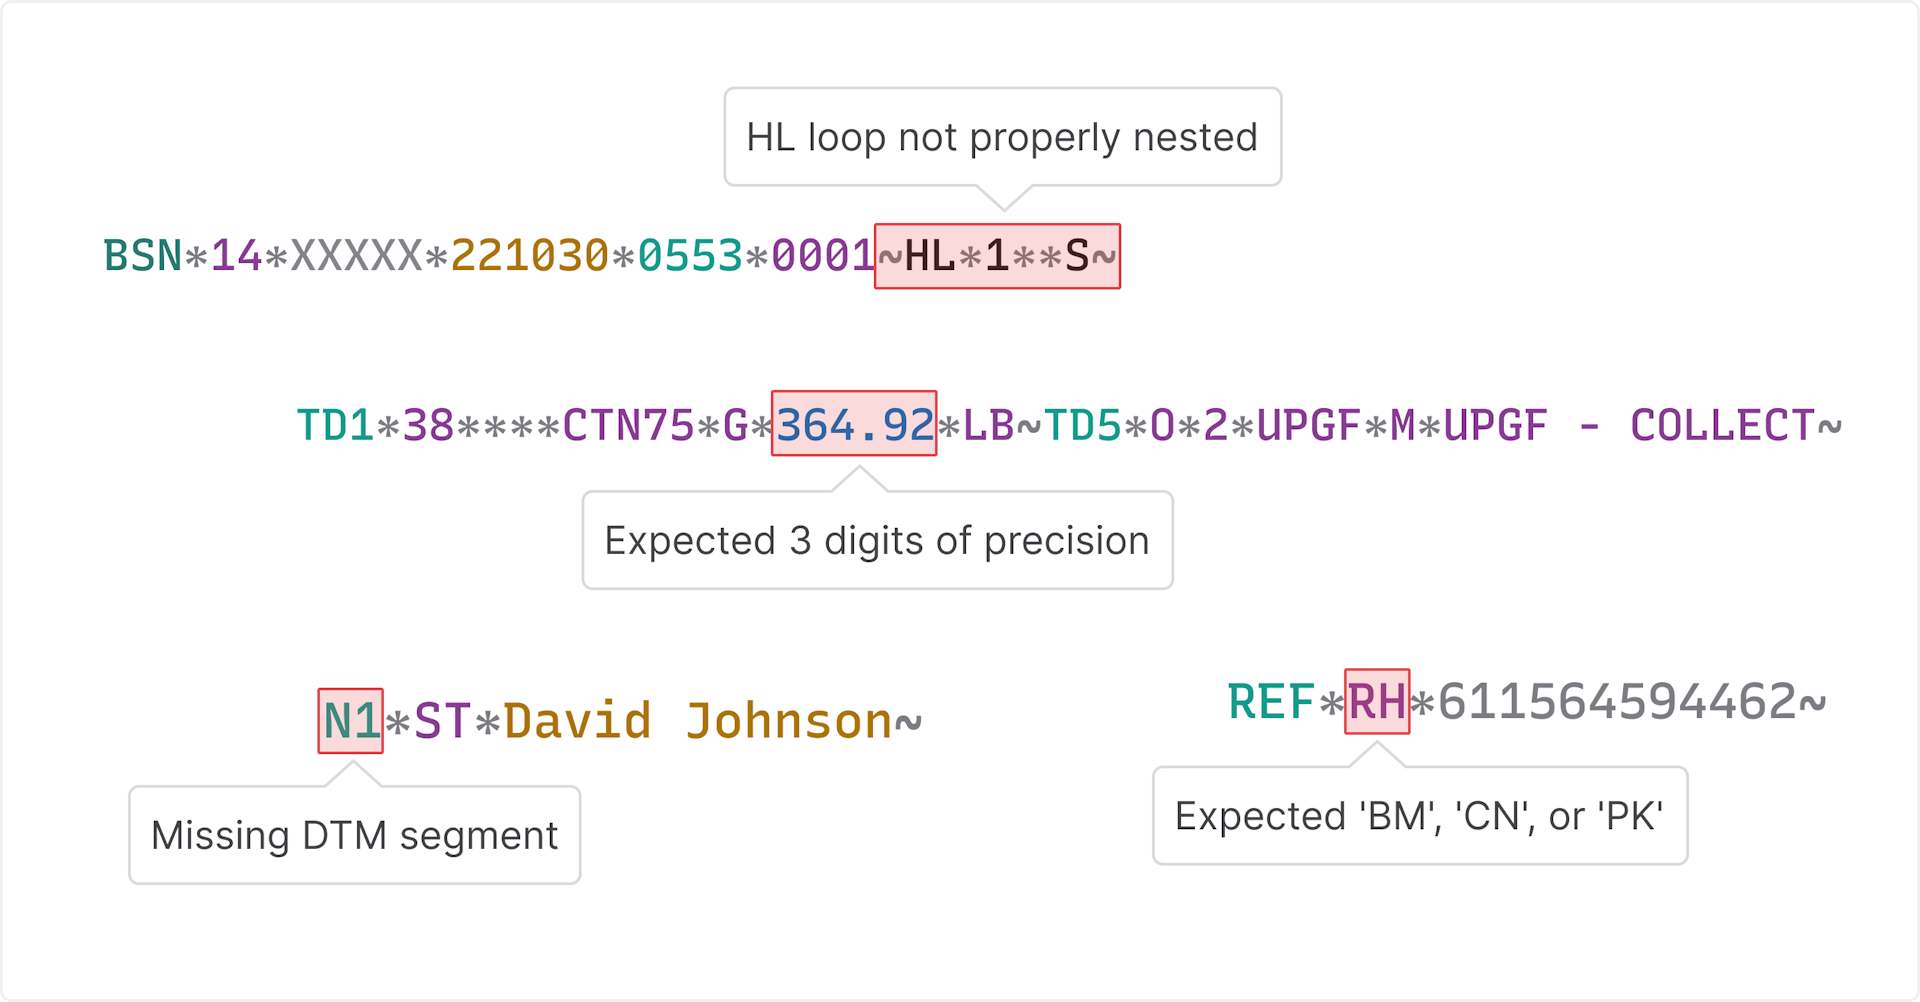 User interface depicting errors in EDI data